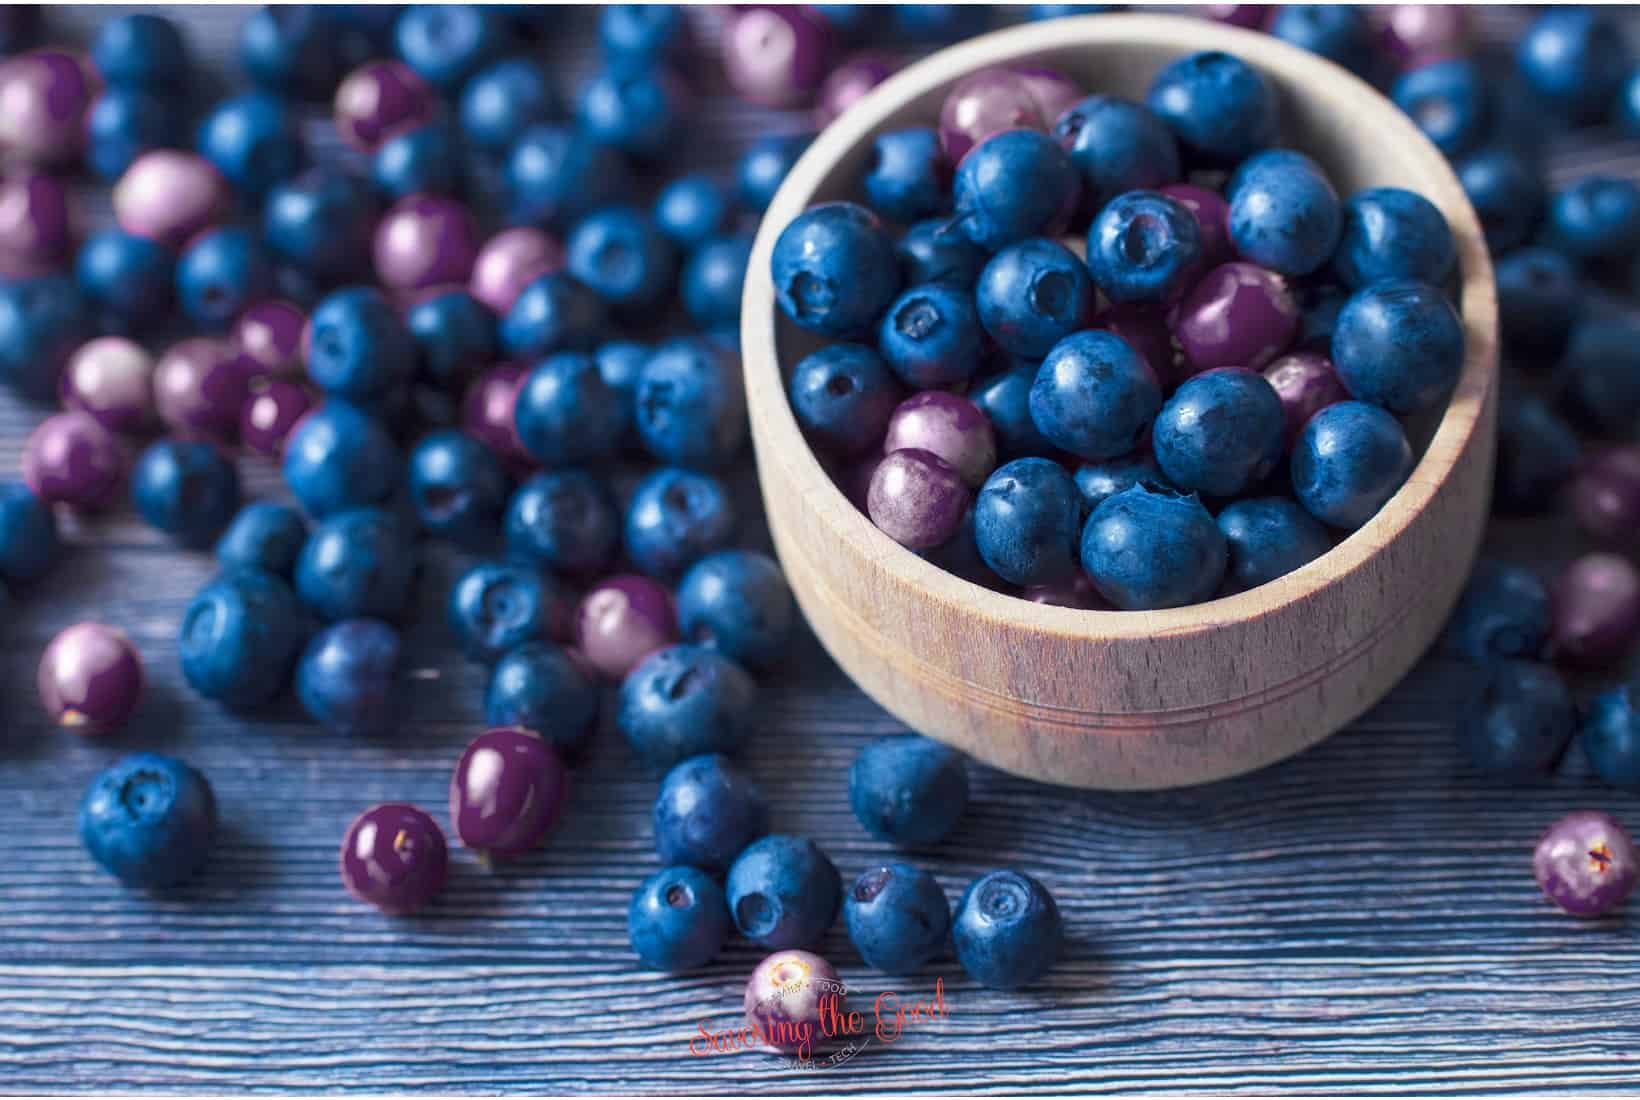 Blue lingonberries